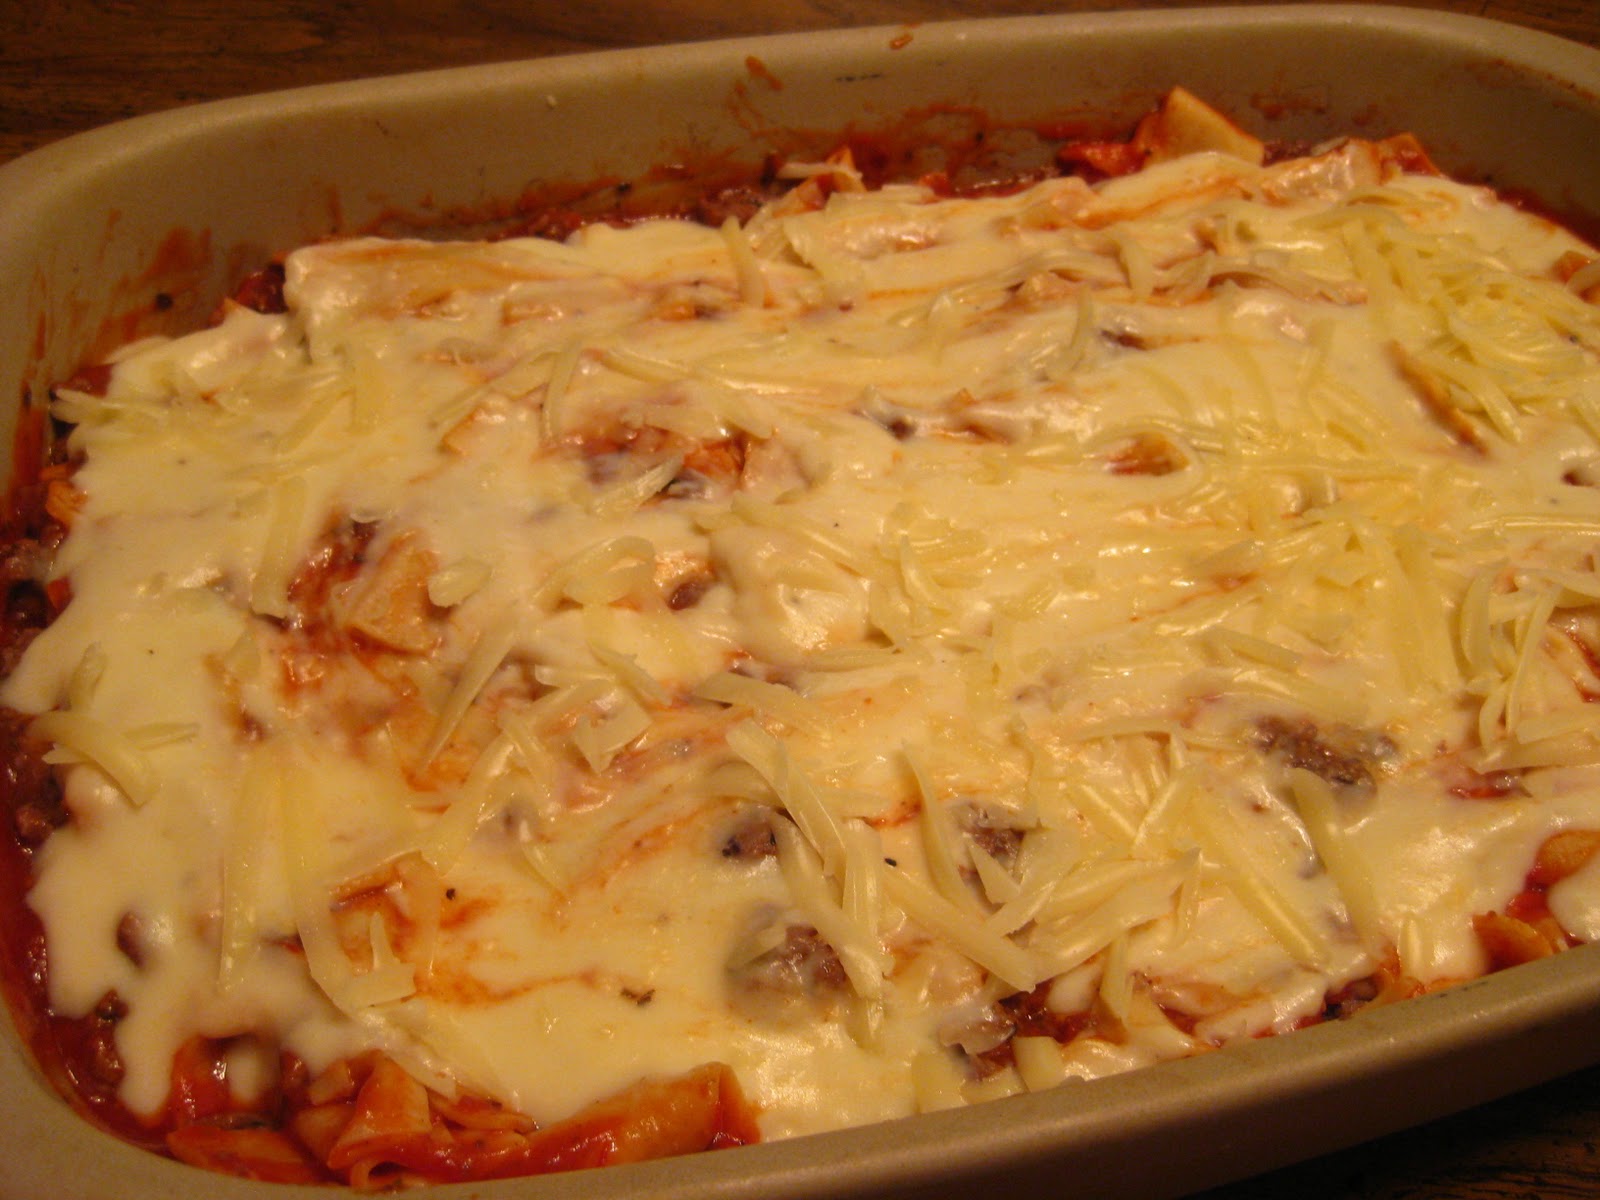 Scratch That: Homemade pasta, lasagna